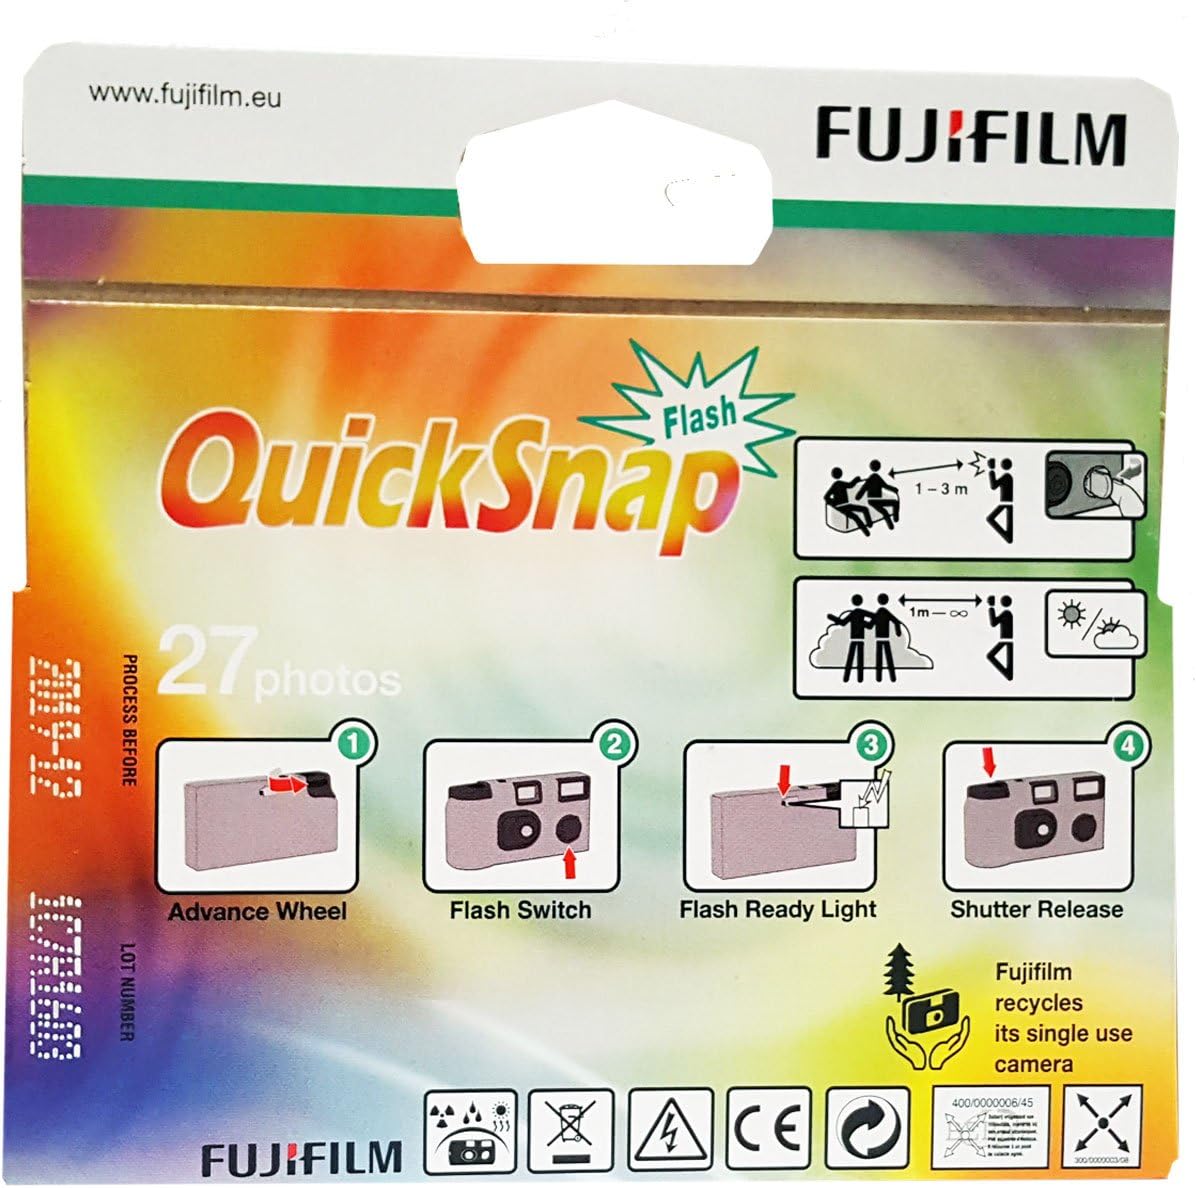 5 x Fujifilm Quicksnap Flash Disposable Cameras, 27 Images, with Flash